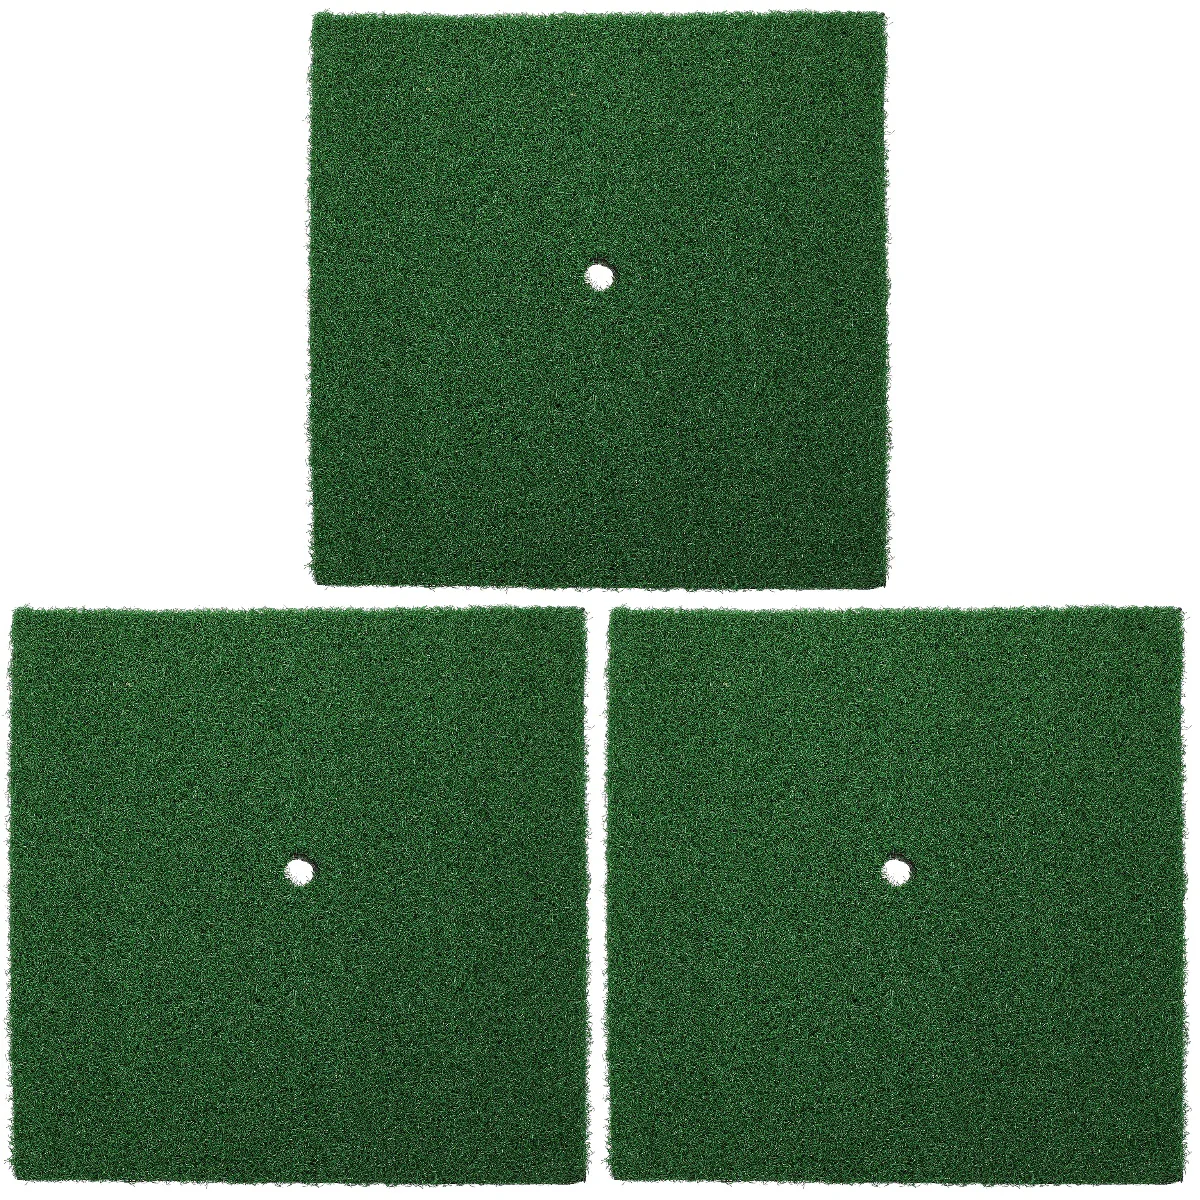 

Set 3 Practice Mat Golfing Outdoor Carpets Artificial Turf Training Green Rug Hit The Ball Practical Hitting